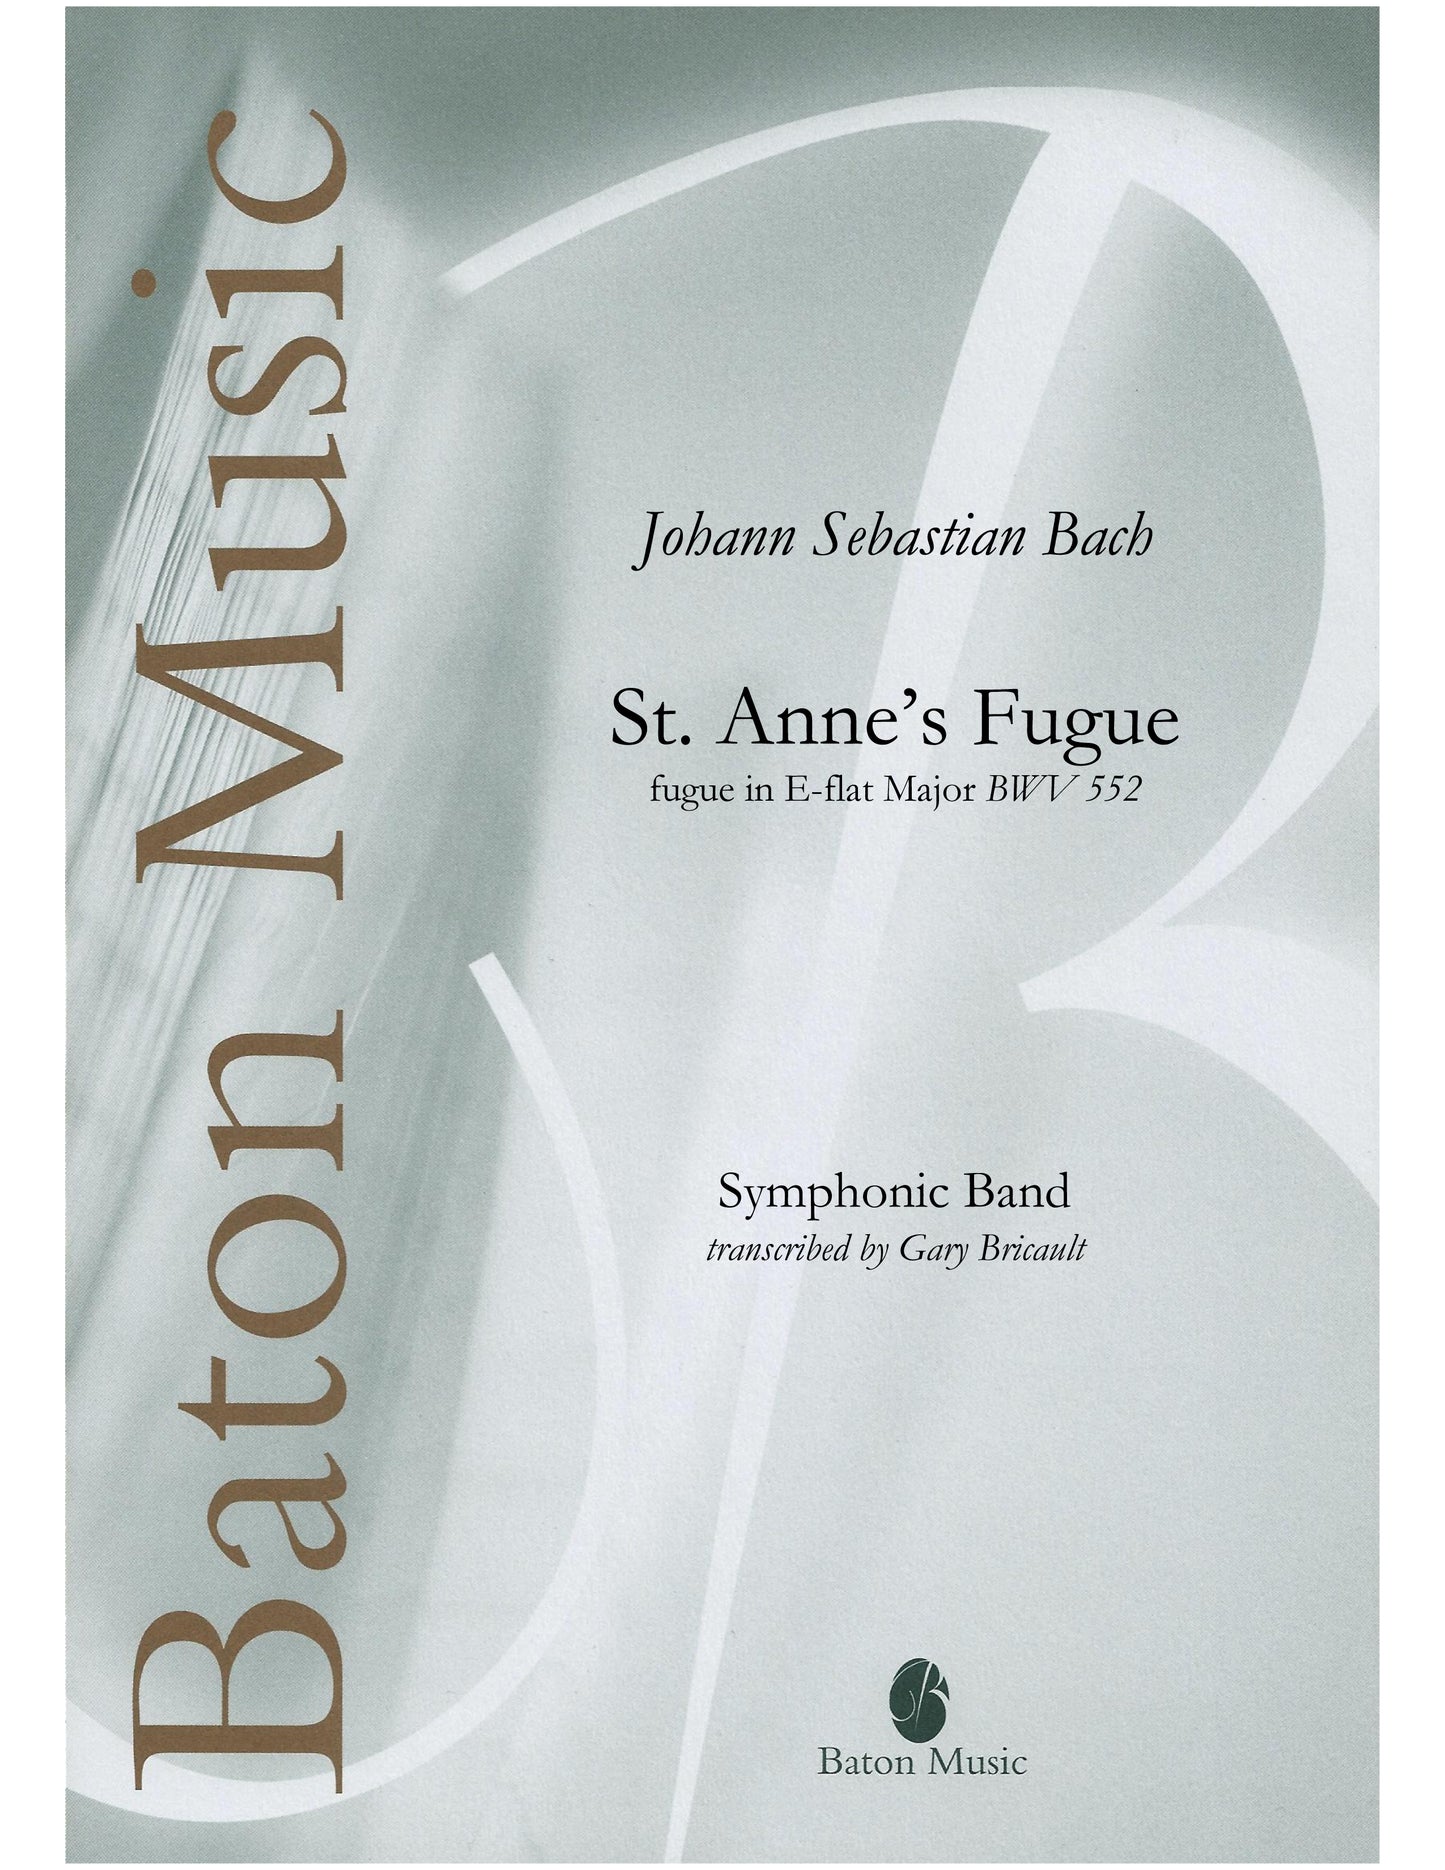 Fugue in E-flat major BWV 552 (St. Anne) - J.S. Bach